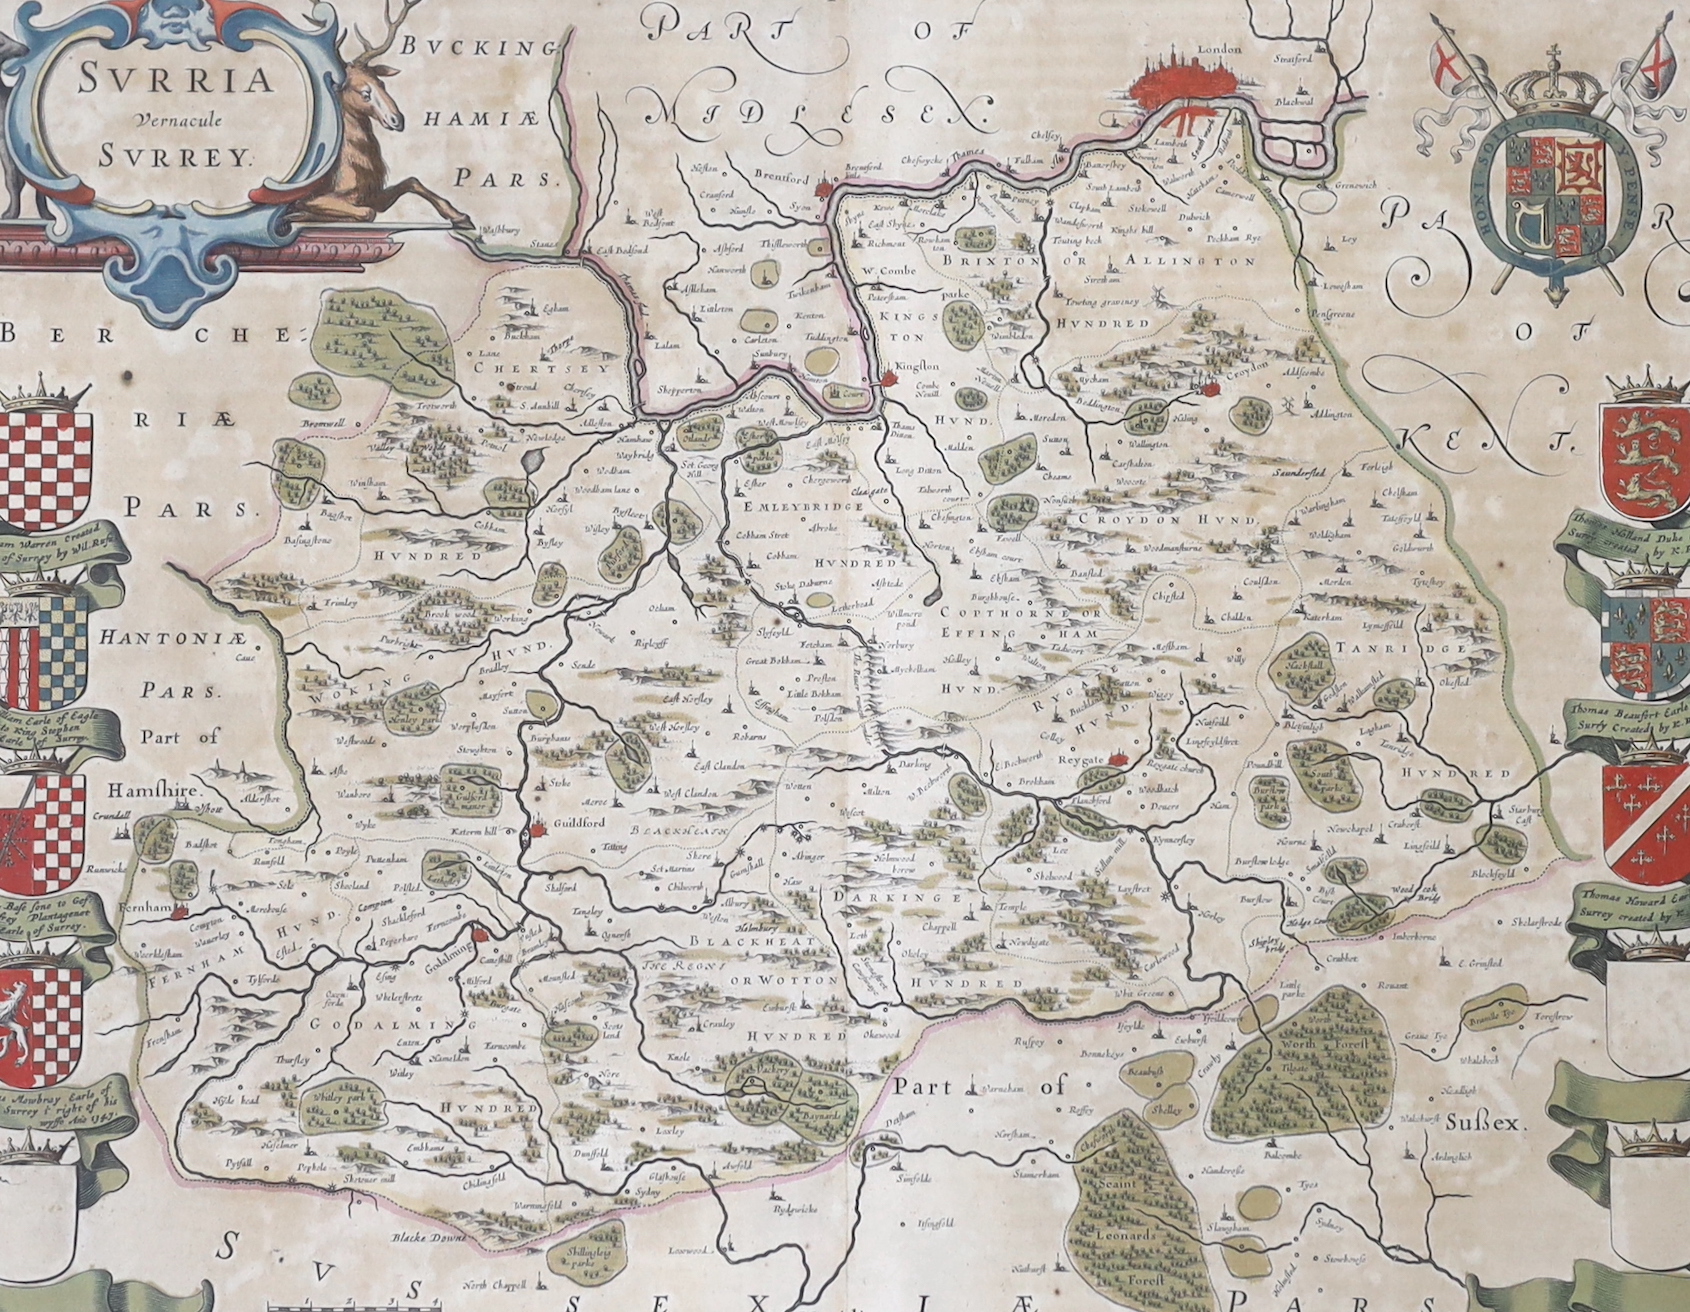 After Johannes Blaeu (Dutch, 1596-1673), hand coloured engraved map ‘’Surria vernacule Surrey’’, text verso, 38 x 48.5cm